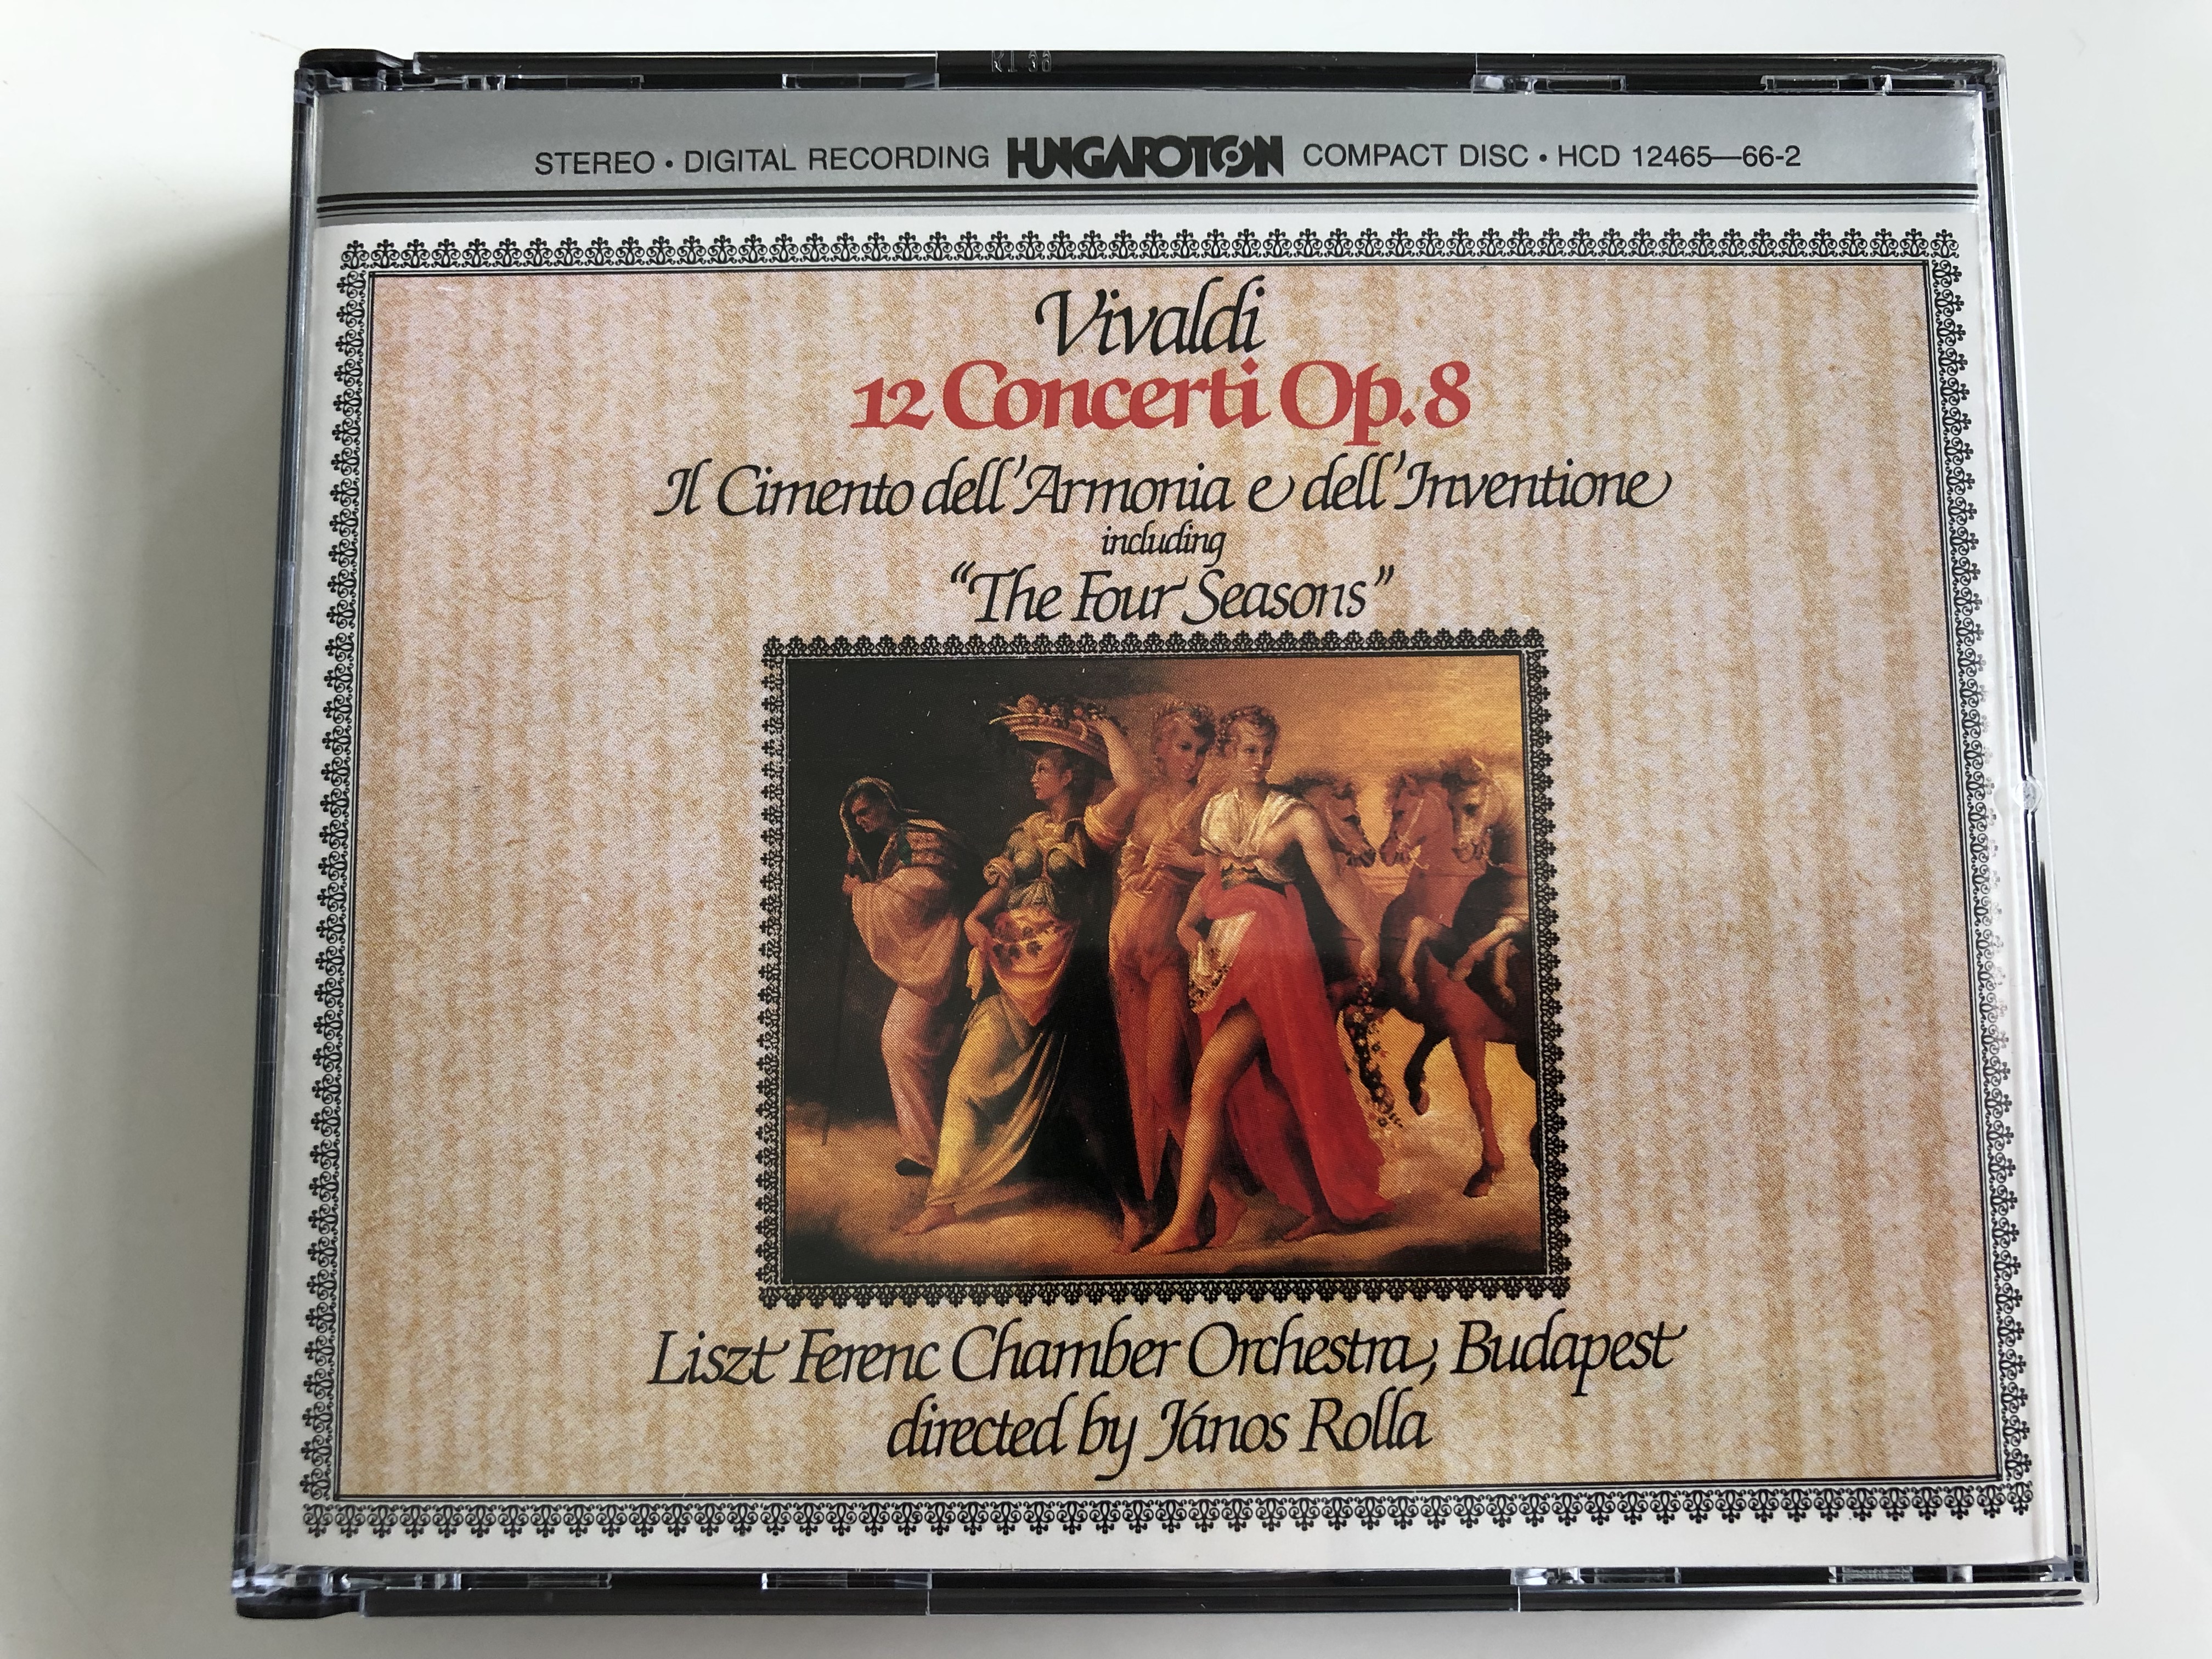 vivaldi-12-concerti-op.-8-il-cimento-dell-armonia-e-dell-inventione-including-the-four-seasons-liszt-ferenc-chamber-orchestra-budipest-directed-by-janos-rolla-hungaroton-2x-audio-cd-s-1-.jpg